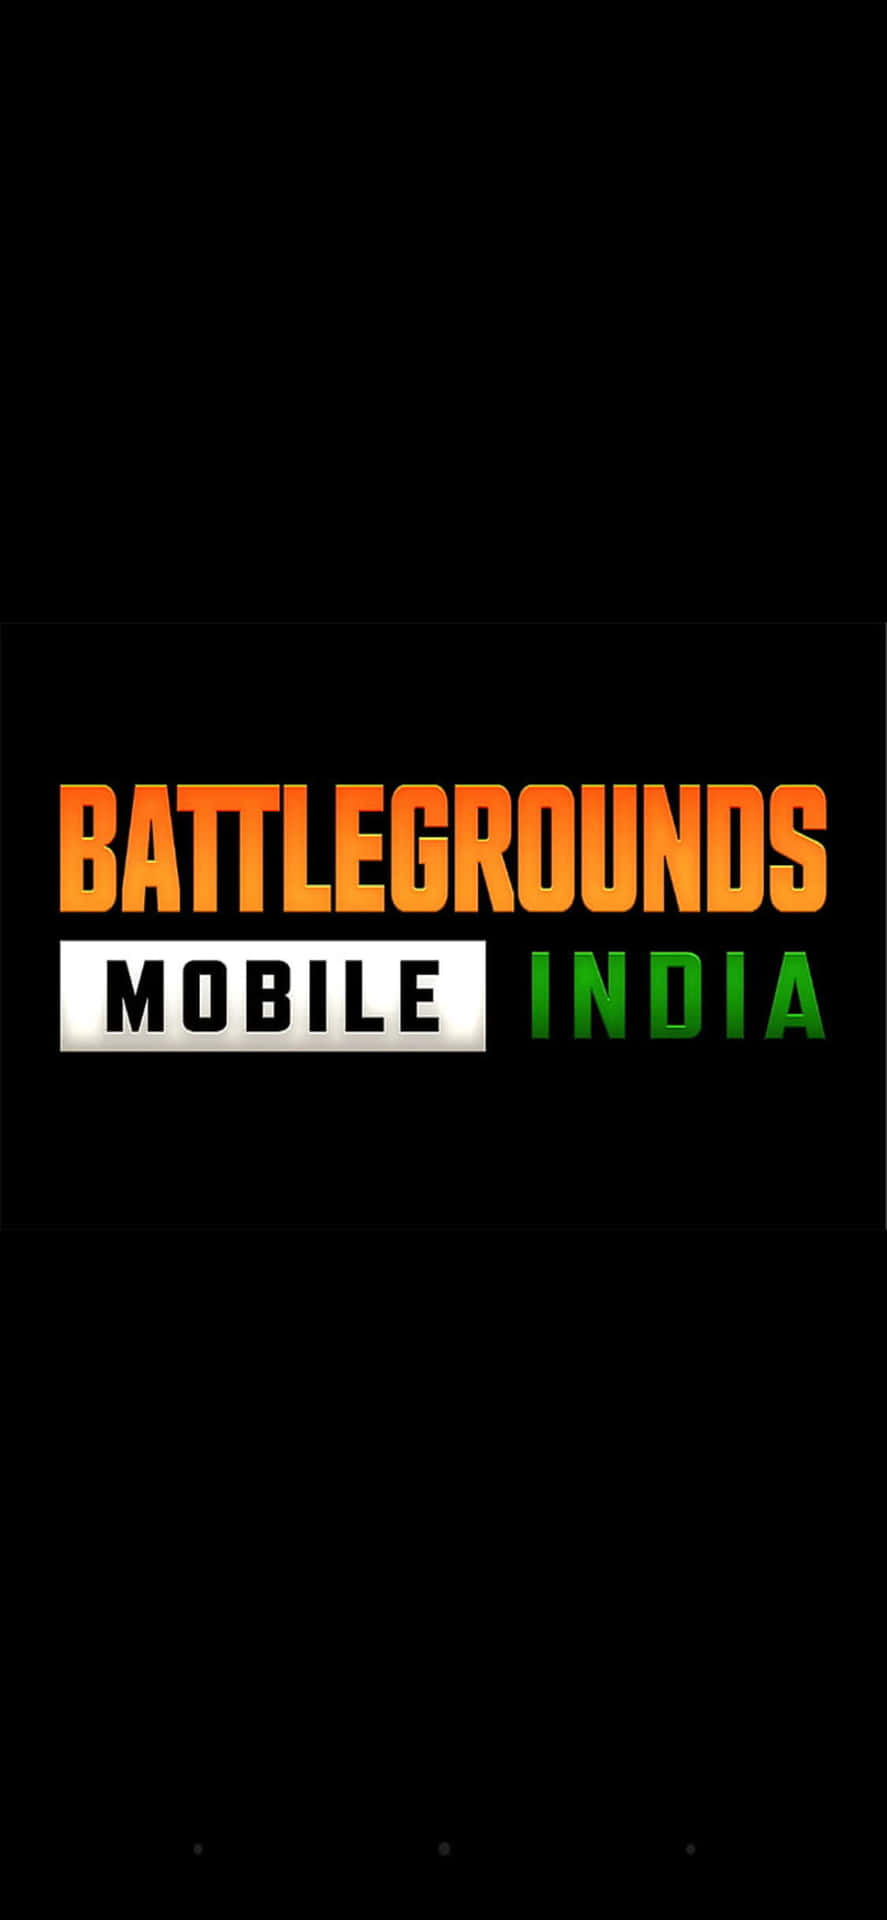 battlegrounds mobile india - screenshot